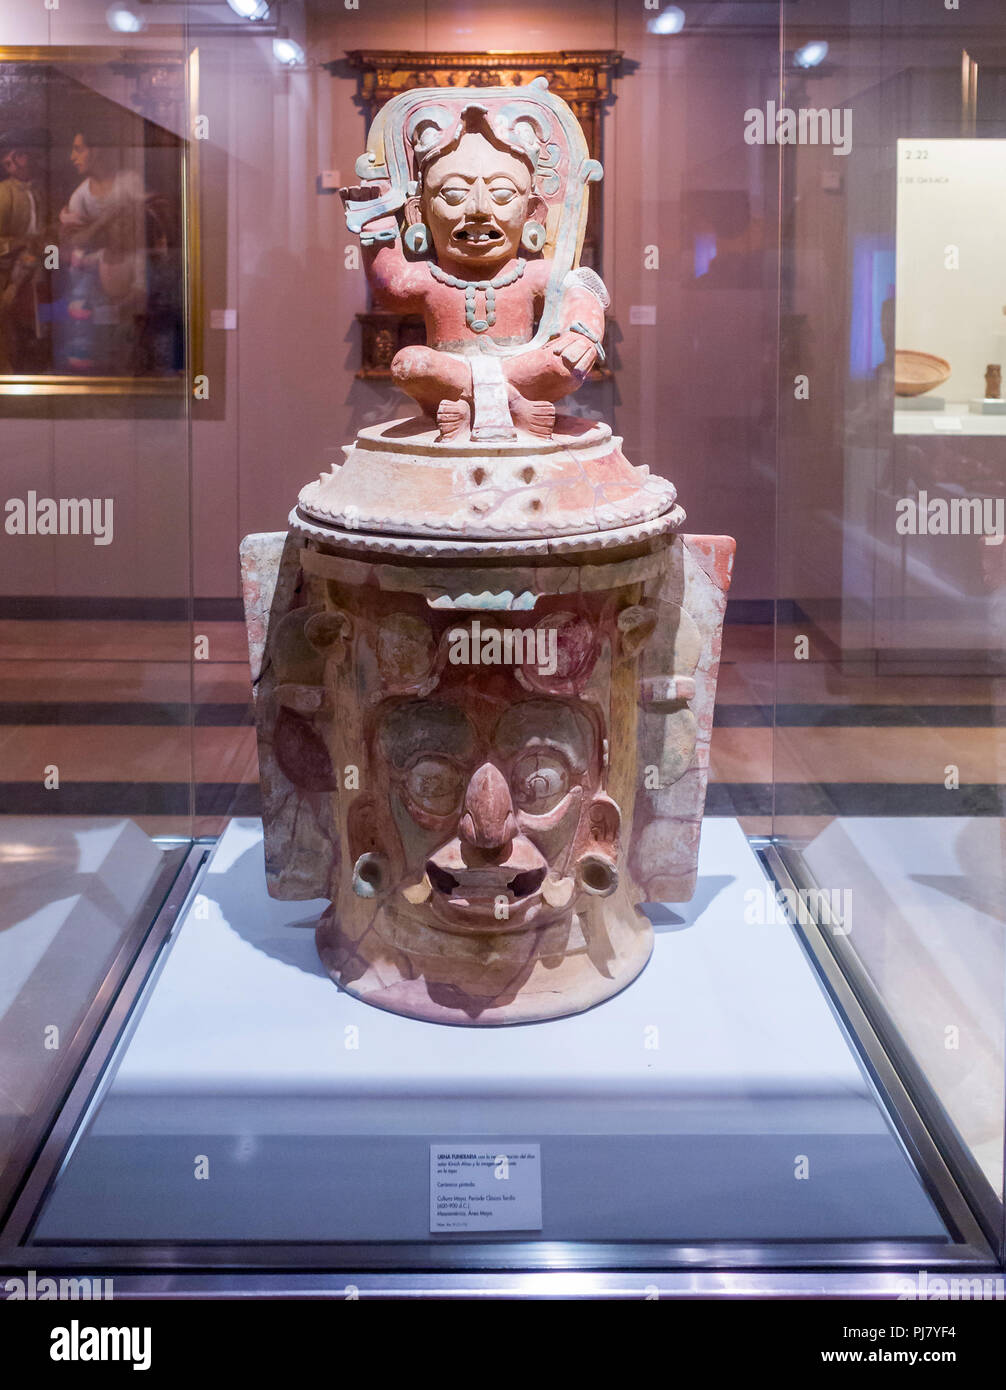 Urna funeraria de cerámica pintada. Museo de América. Madrid. España Stock Photo